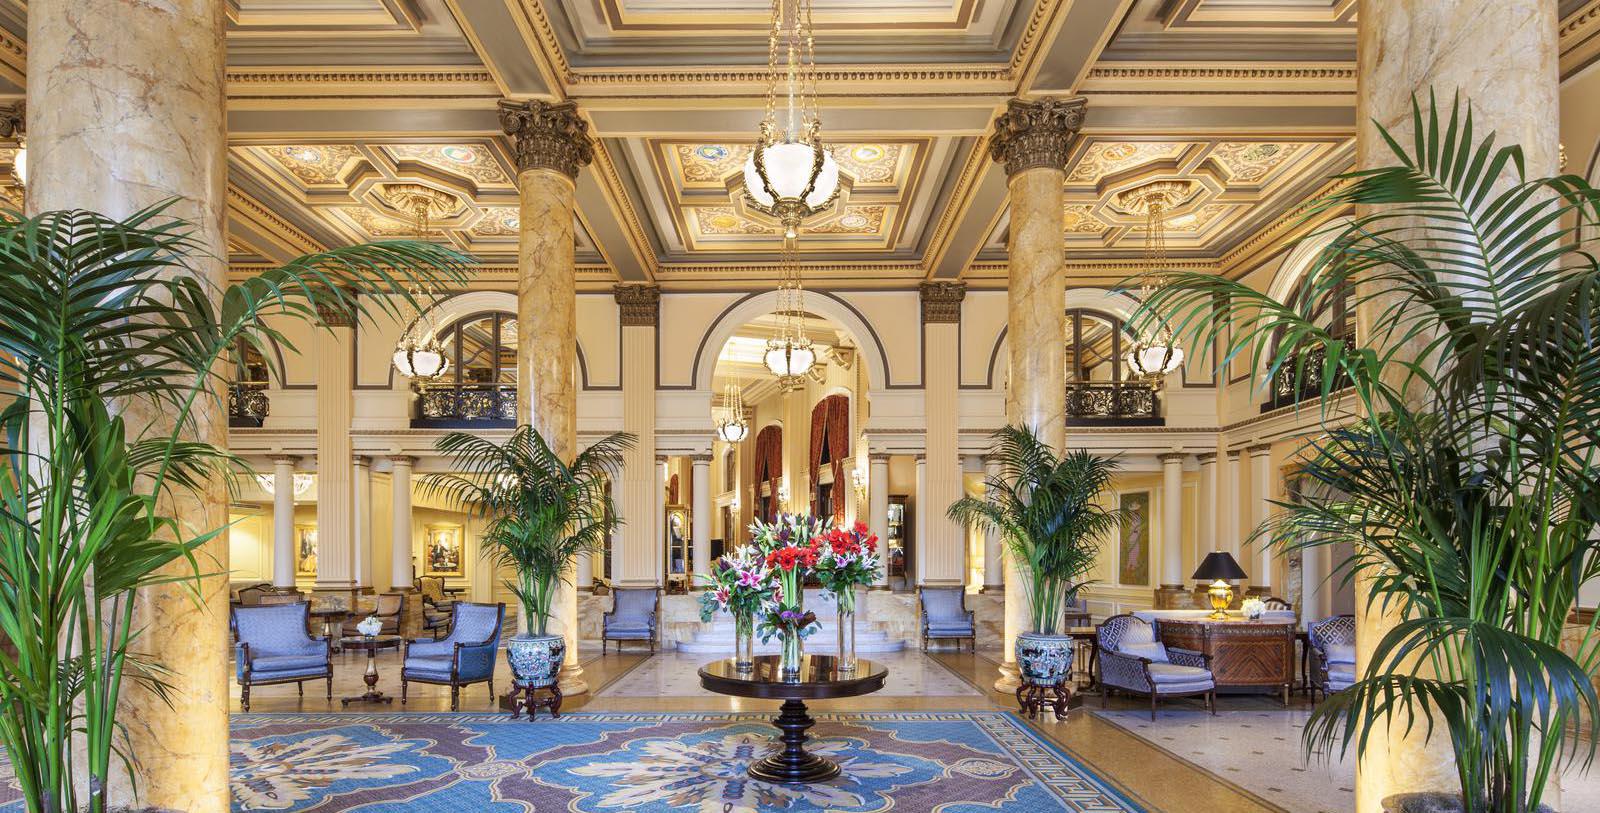 Image of grand lobby The Willard InterContinental, Washington DC, 1847, Member of Historic Hotels of America, Hot Deals